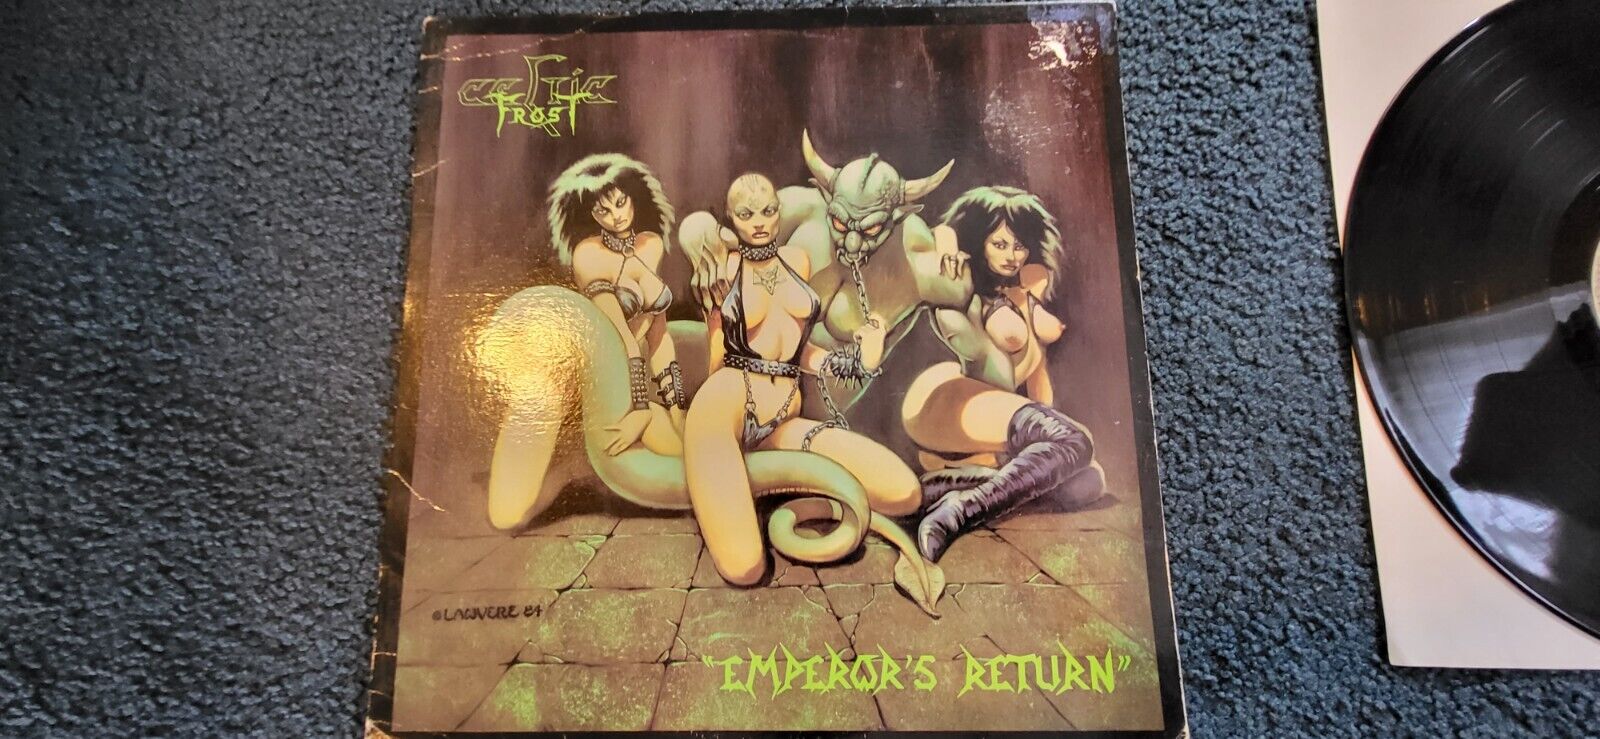 Celtic Frost The Emperor’s Return EP Vinyl Record Metal Blade 1985 Original